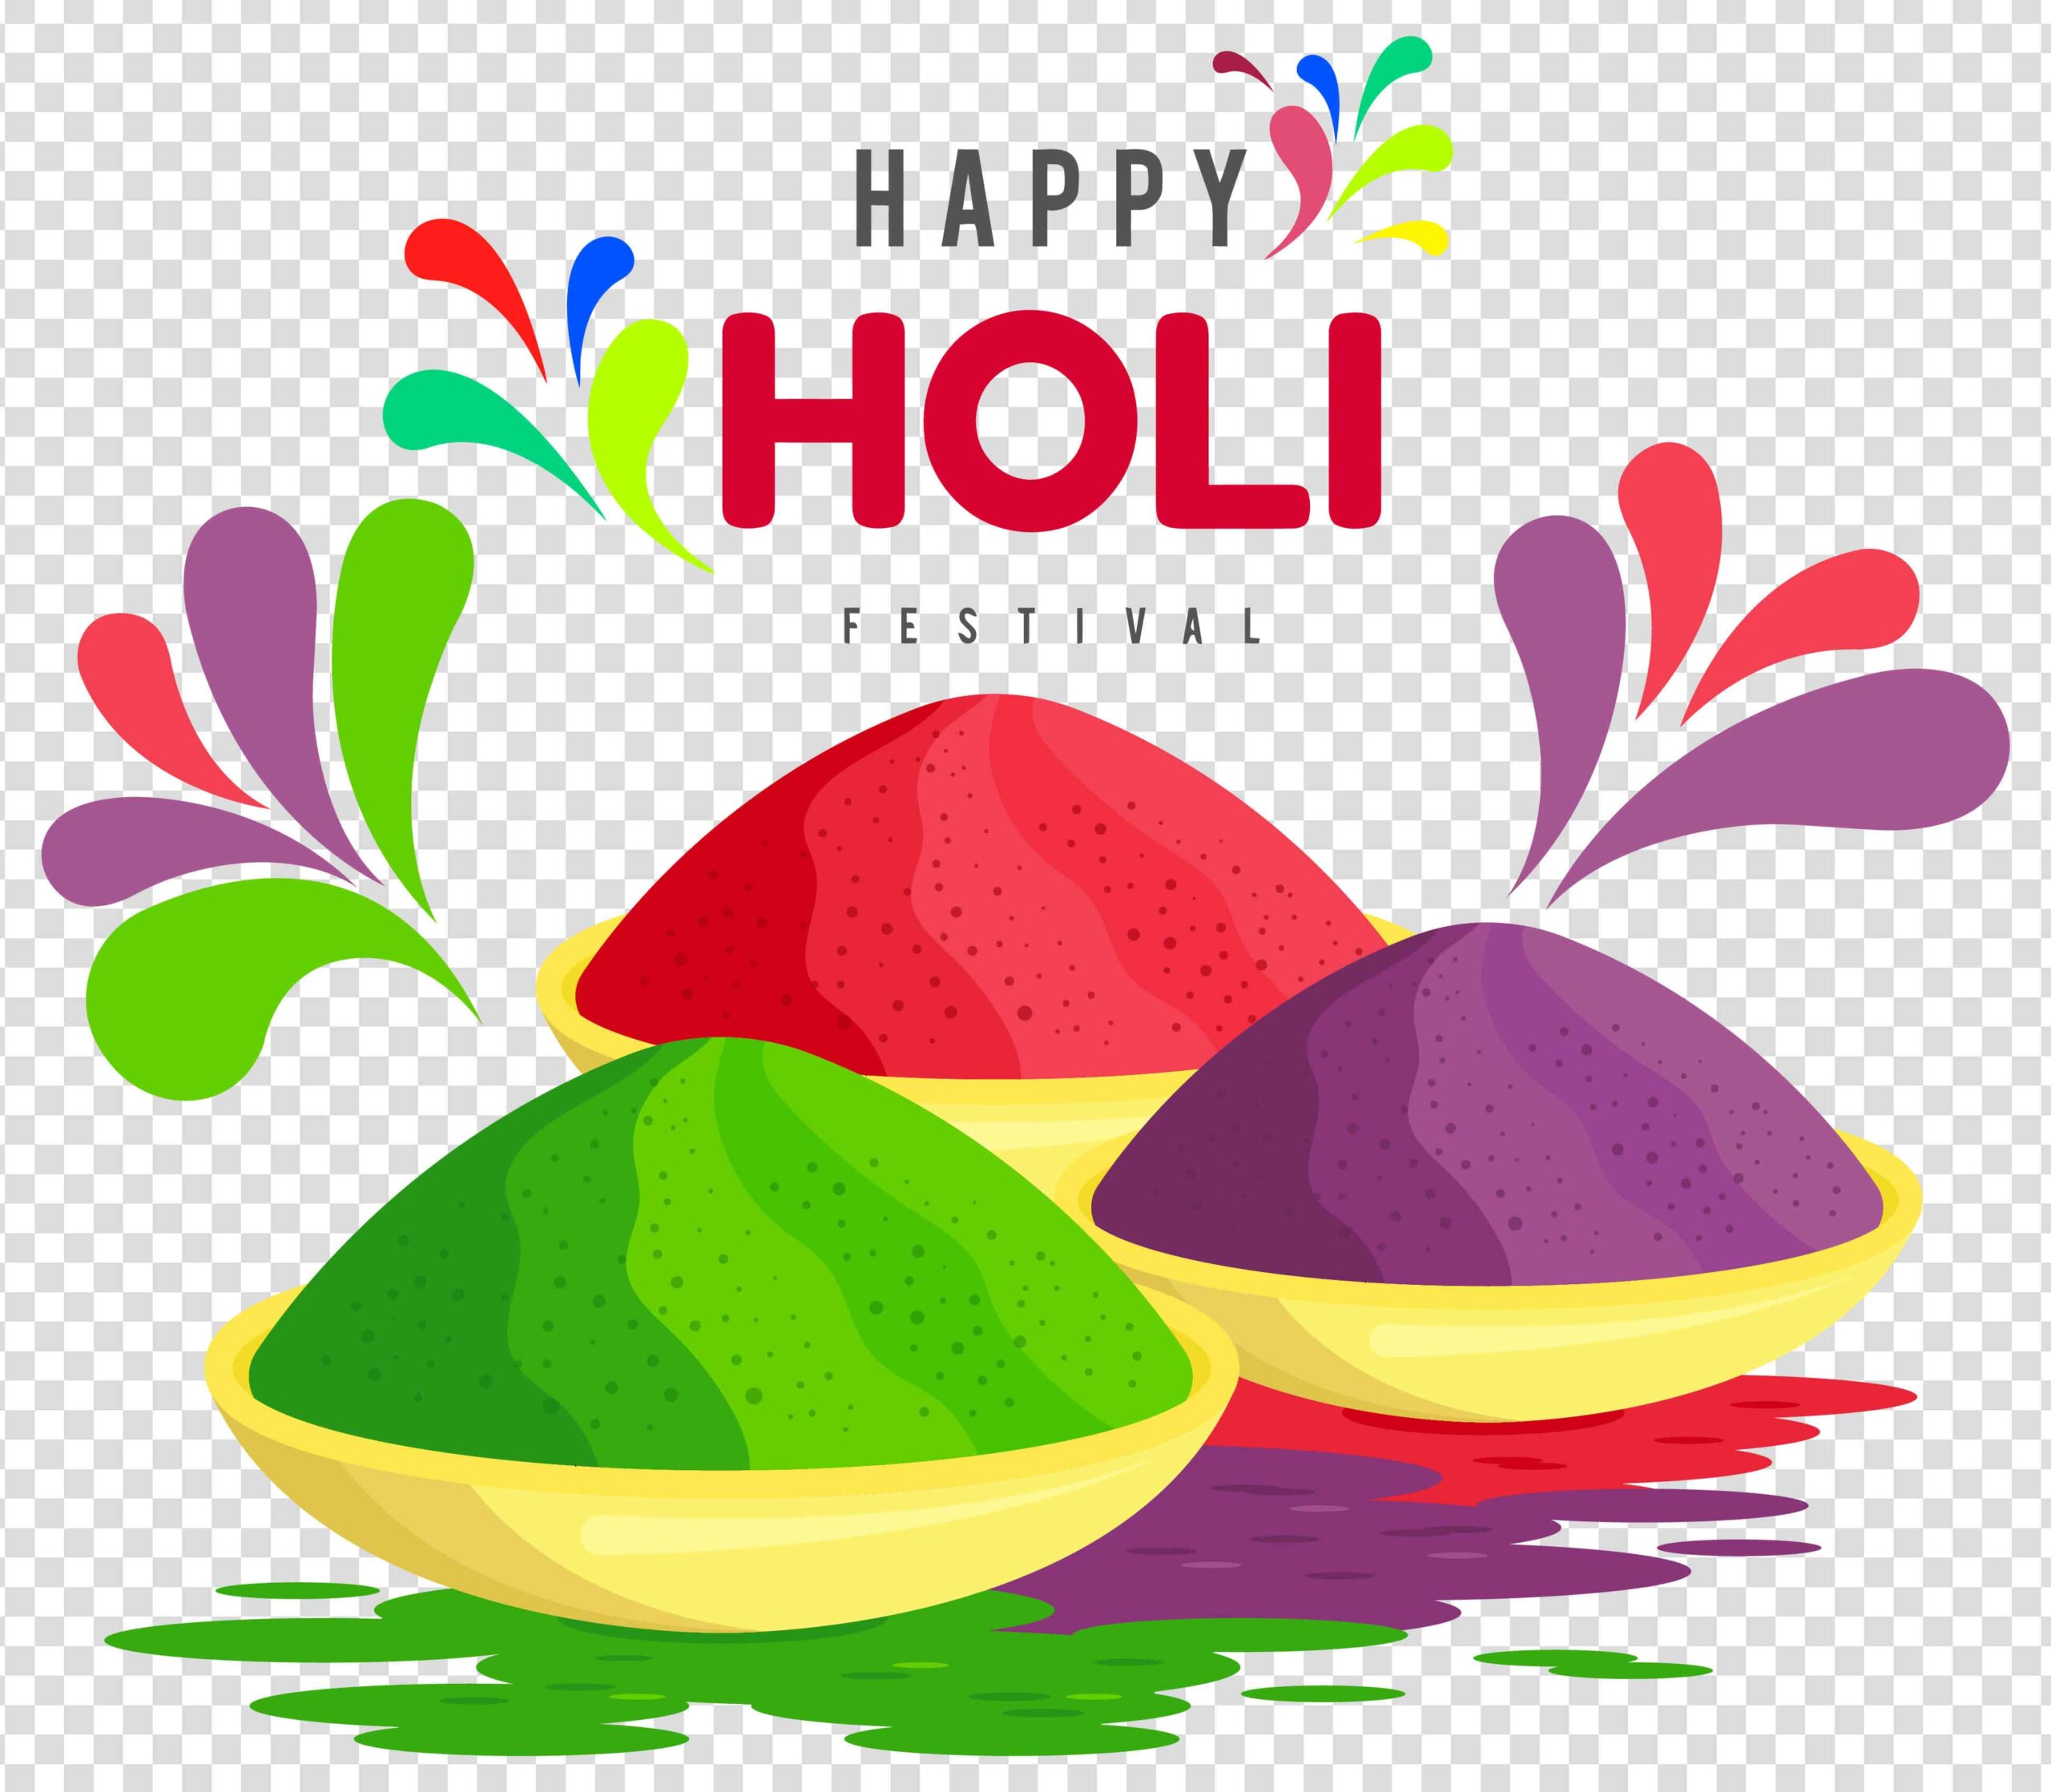 Happy holi colors splash festival background Vector Image